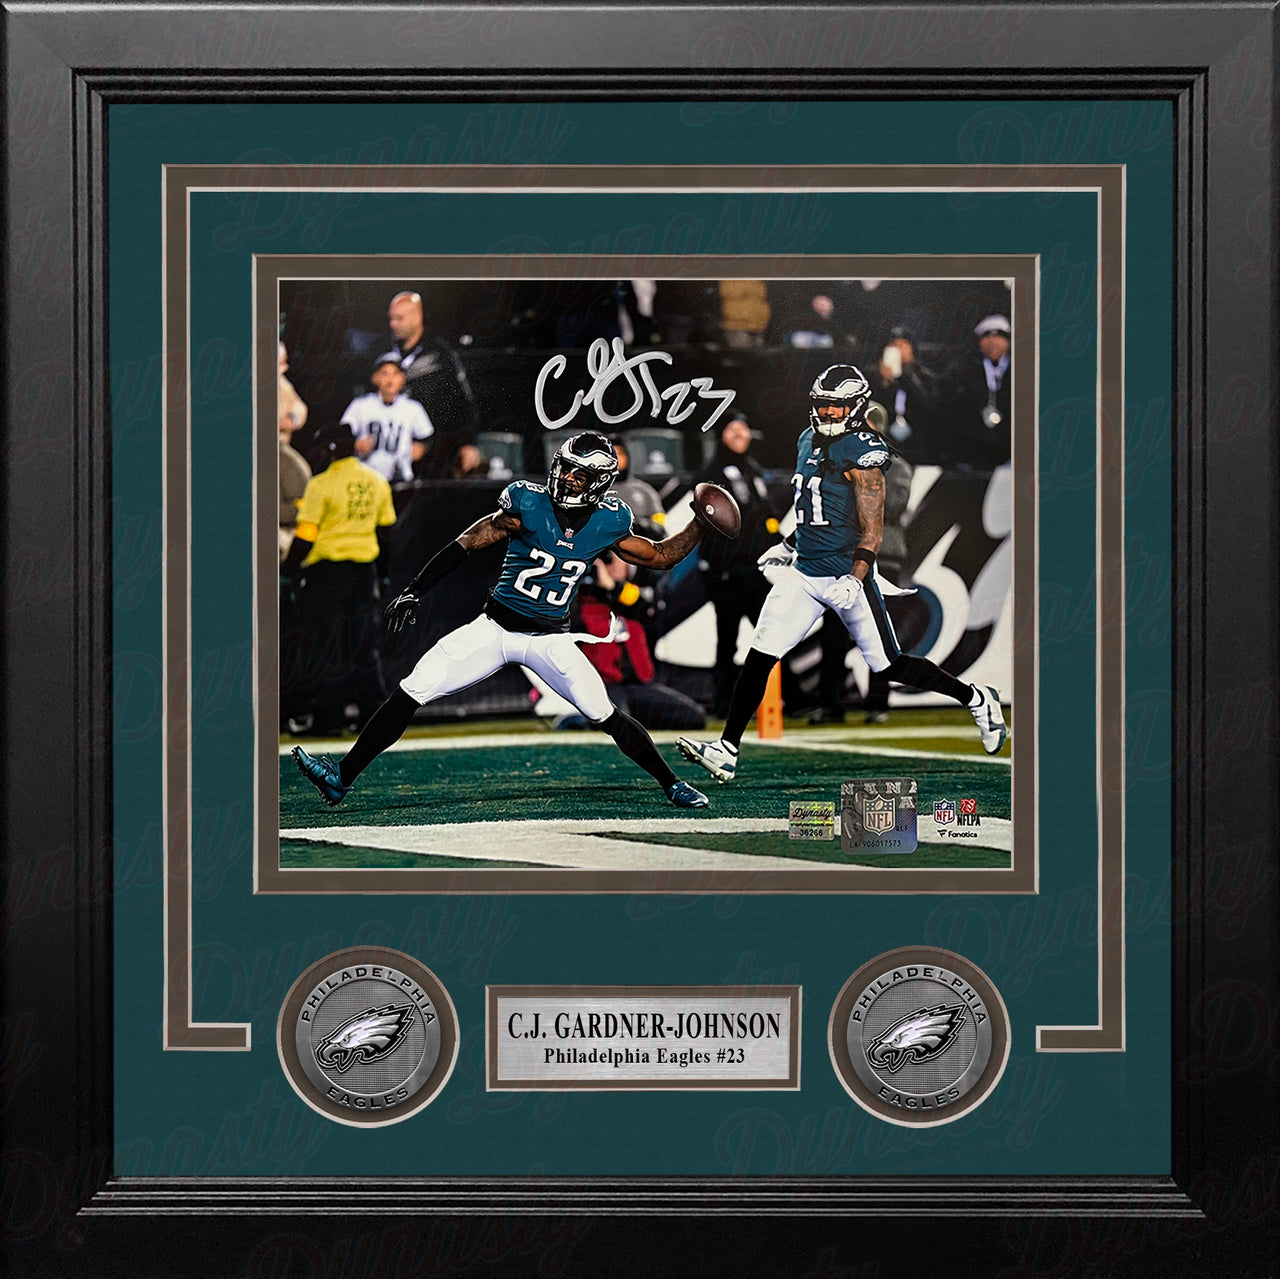 C. J. Gardner-Johnson Touchdown Spike Philadelphia Eagles Autographed Framed Football Photo - Dynasty Sports & Framing 